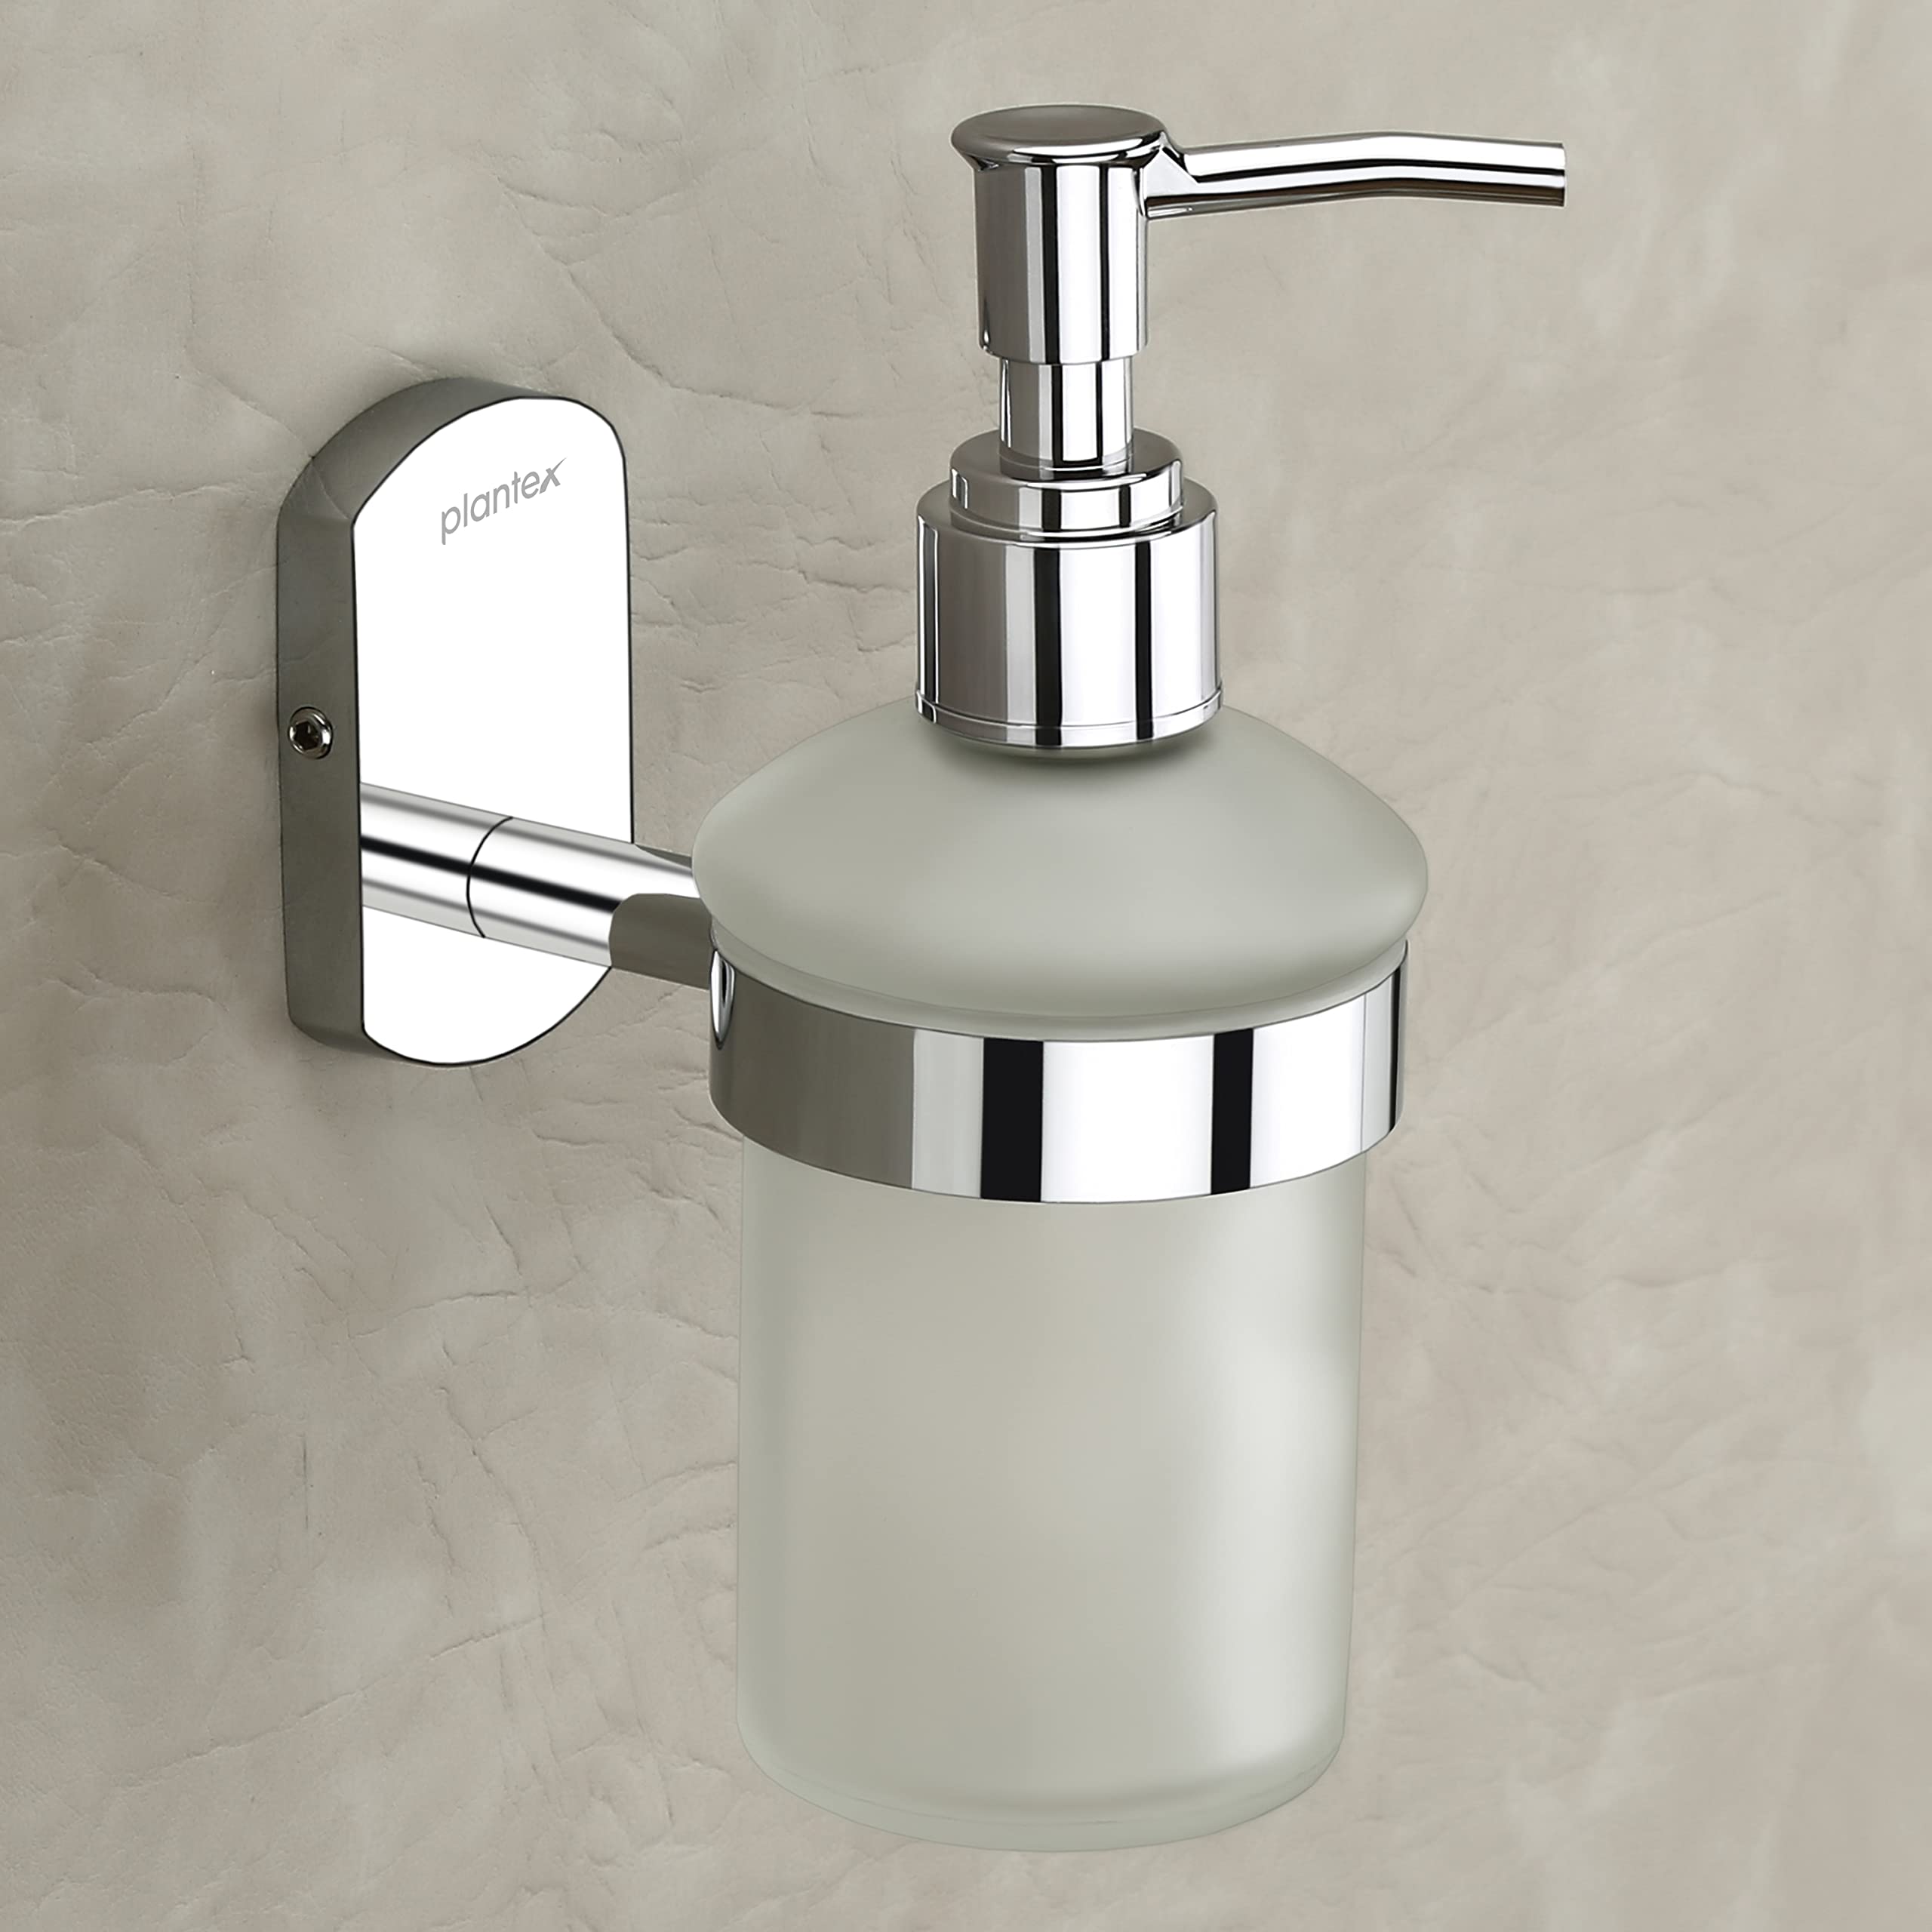 Plantex 304 Grade Stainless Steel Liquid Soap Dispenser/Shampoo Dispenser/Handwash Dispenser/Bathroom Accessories - Pack of 1 (APS-852-Chrome)